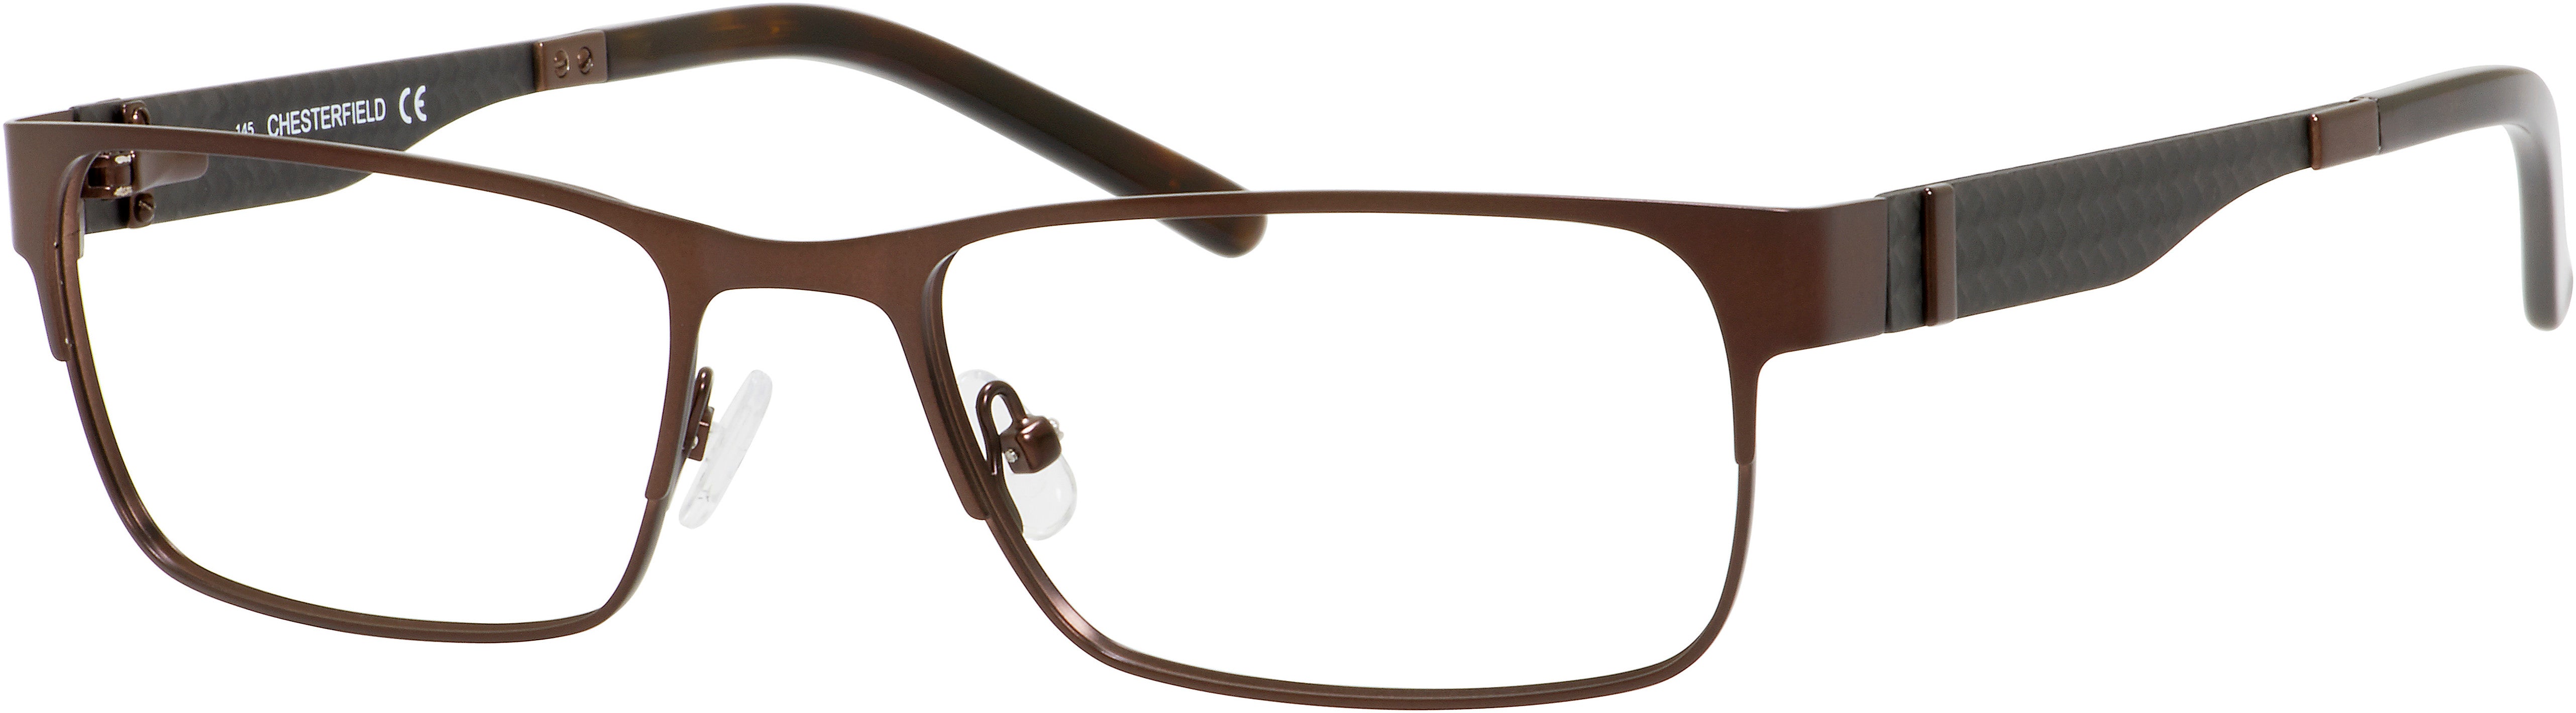  Chesterfield 21 XL Rectangular Eyeglasses 0JYS-0JYS  Matte Dark Brown (00 Demo Lens)